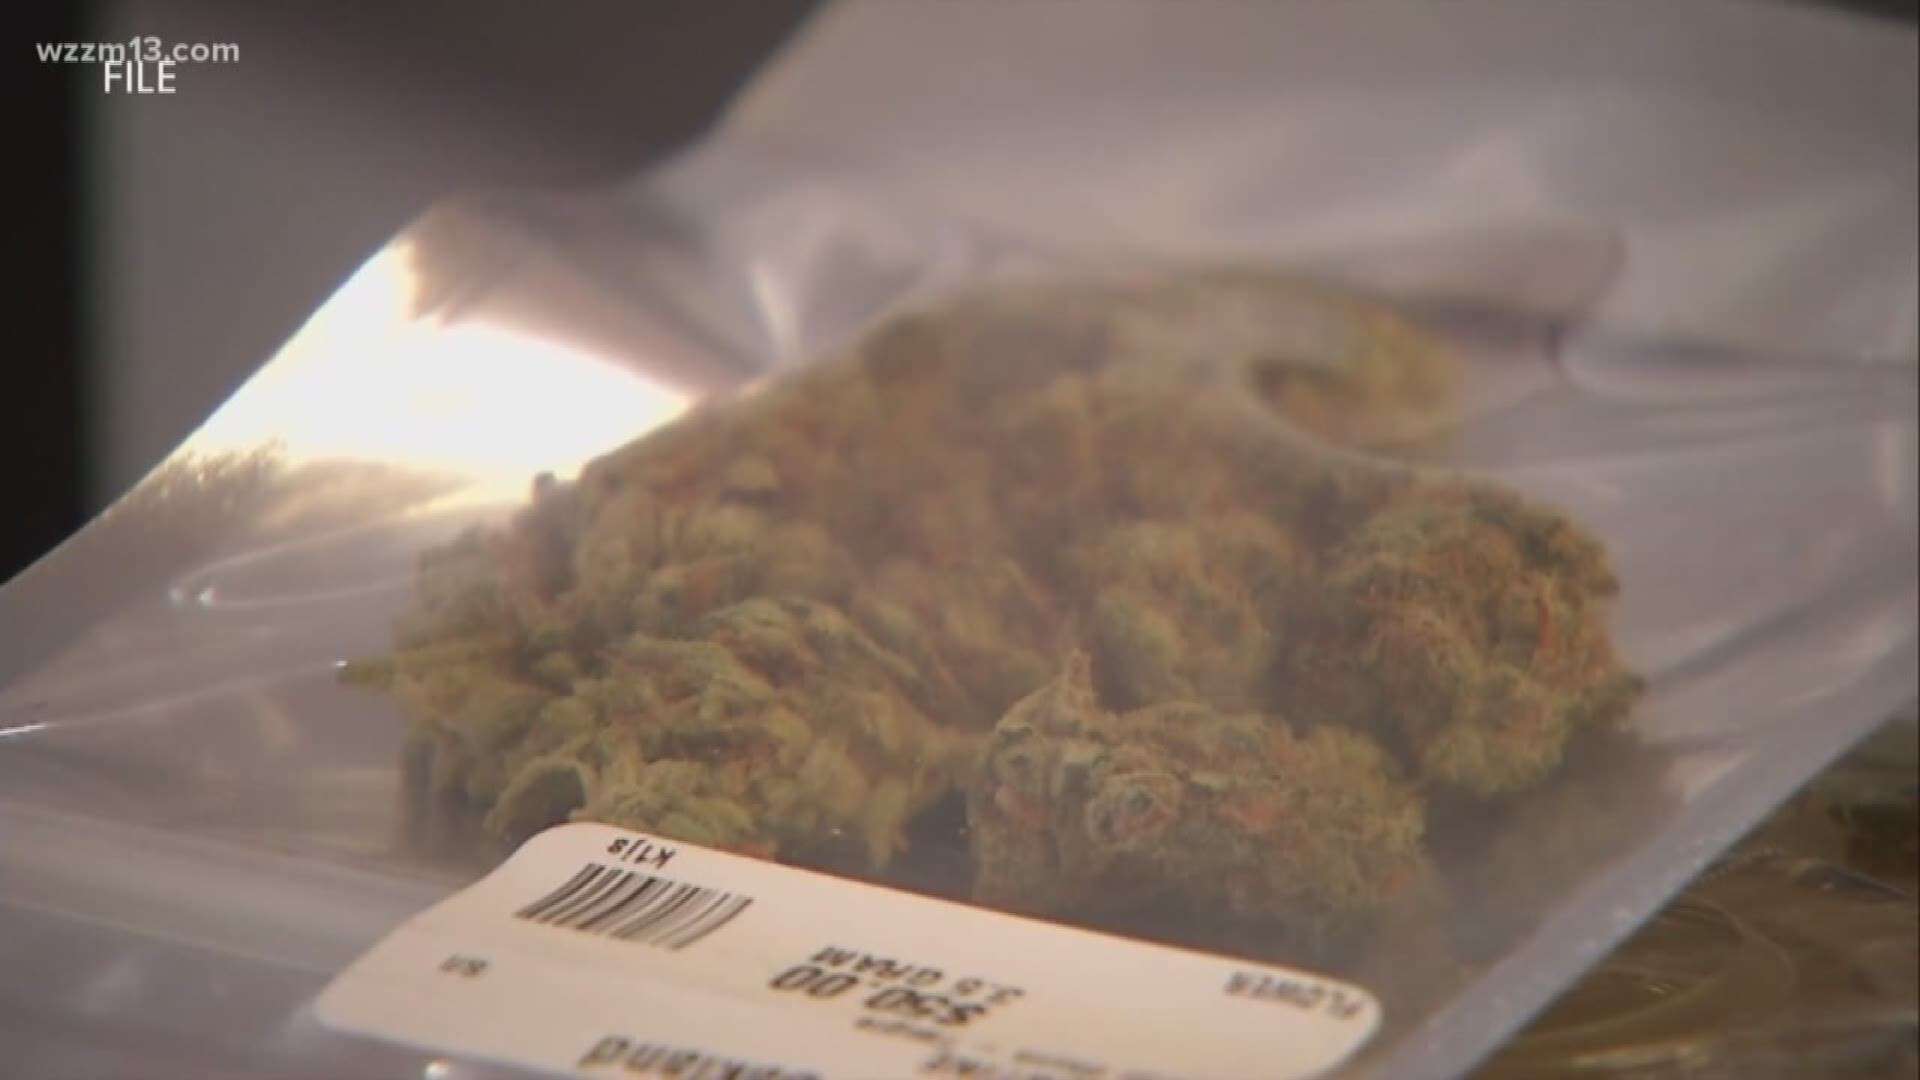 Dozens of medical marijuana shops in Michigan forced to close